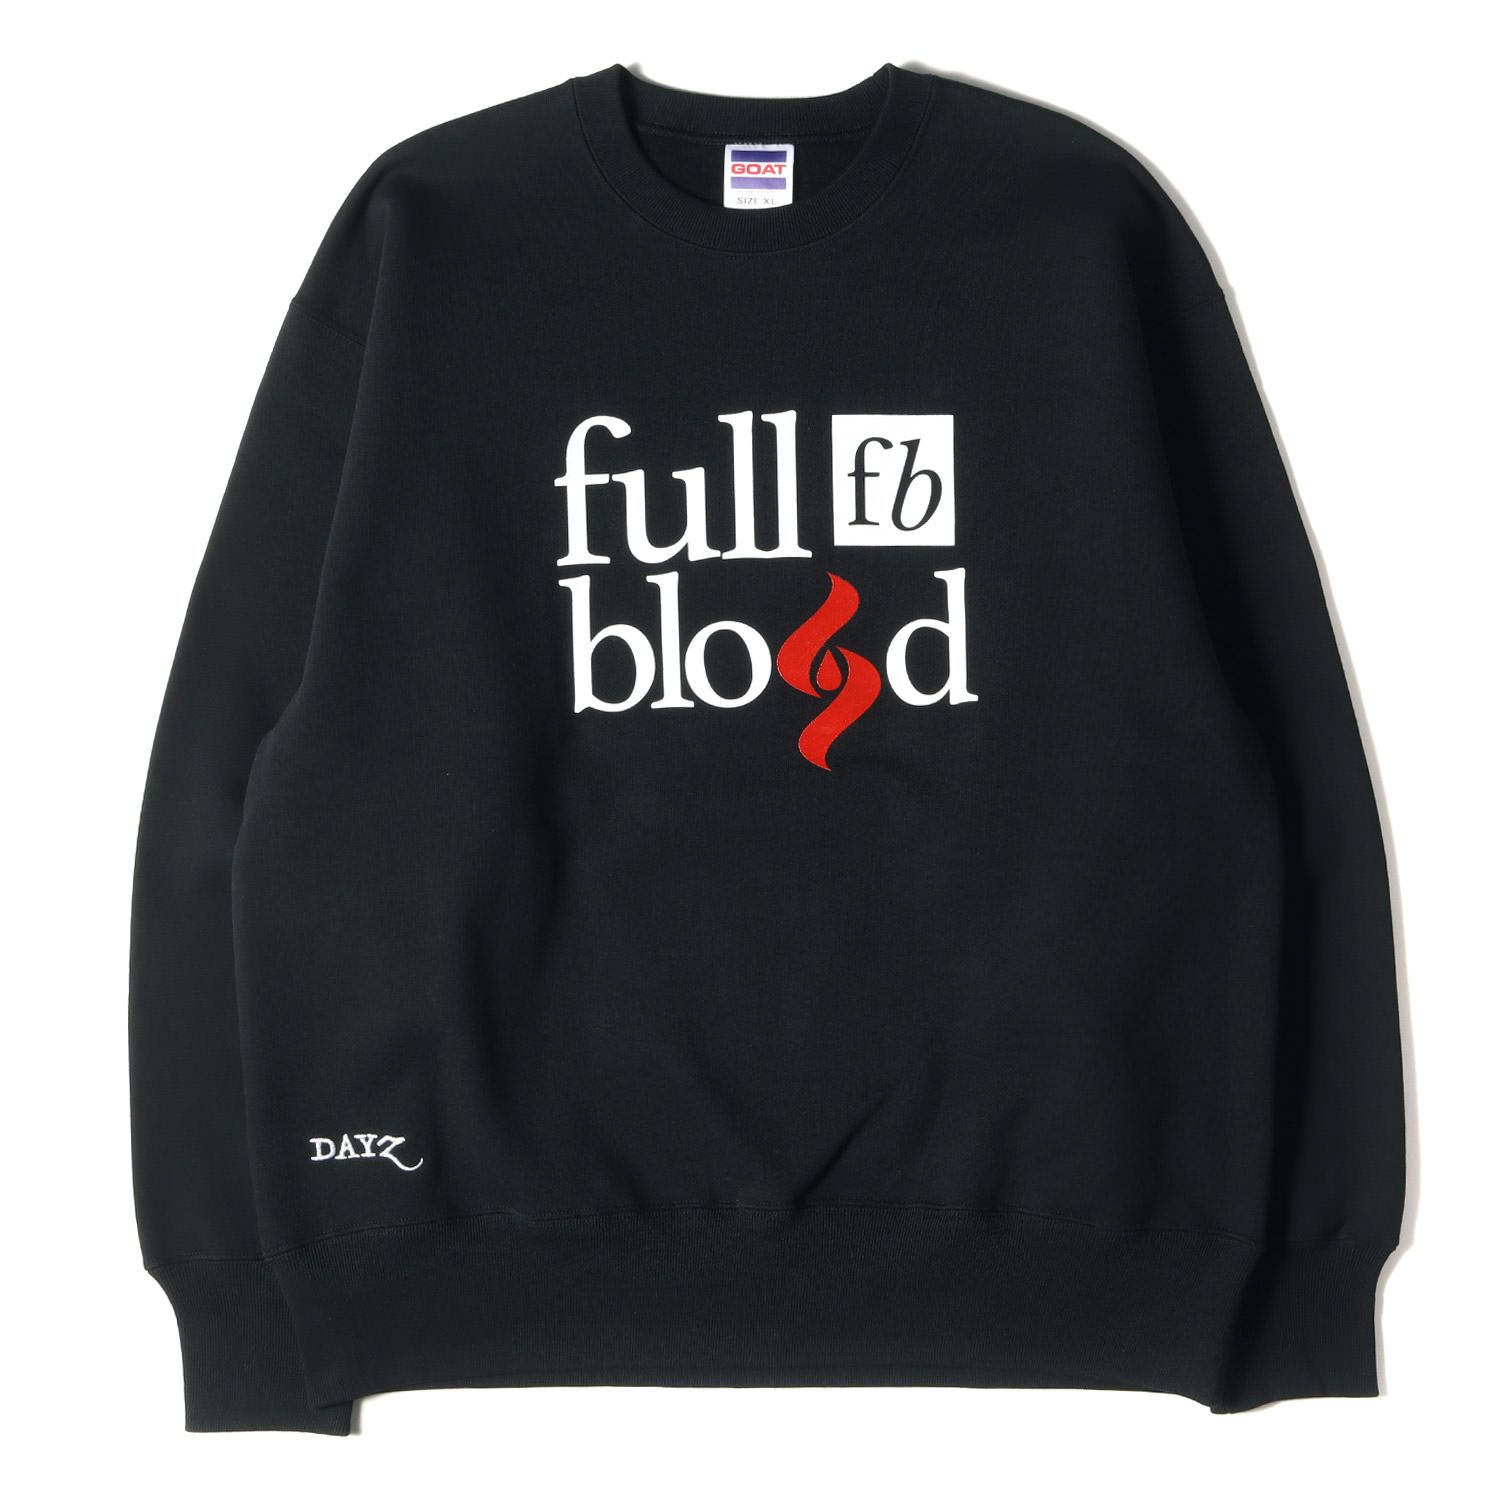 XL】RATS 15周年記念 FULL BLOOD SS TEE Tシャツ - メンズ